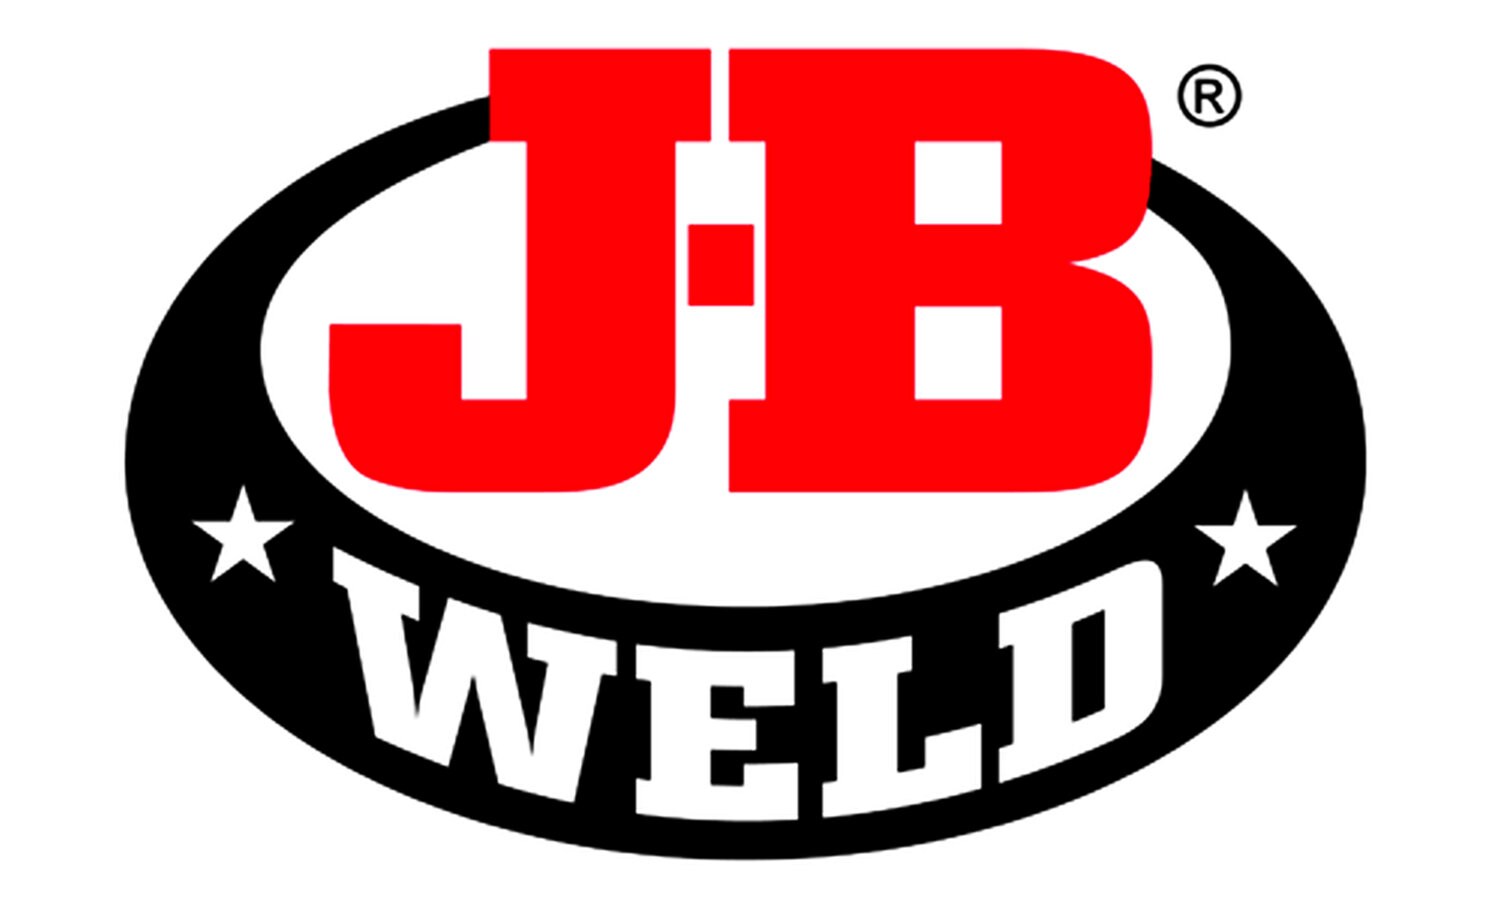 JB Weld Extremeheat Metallic Repair Paste Extreme High Heat